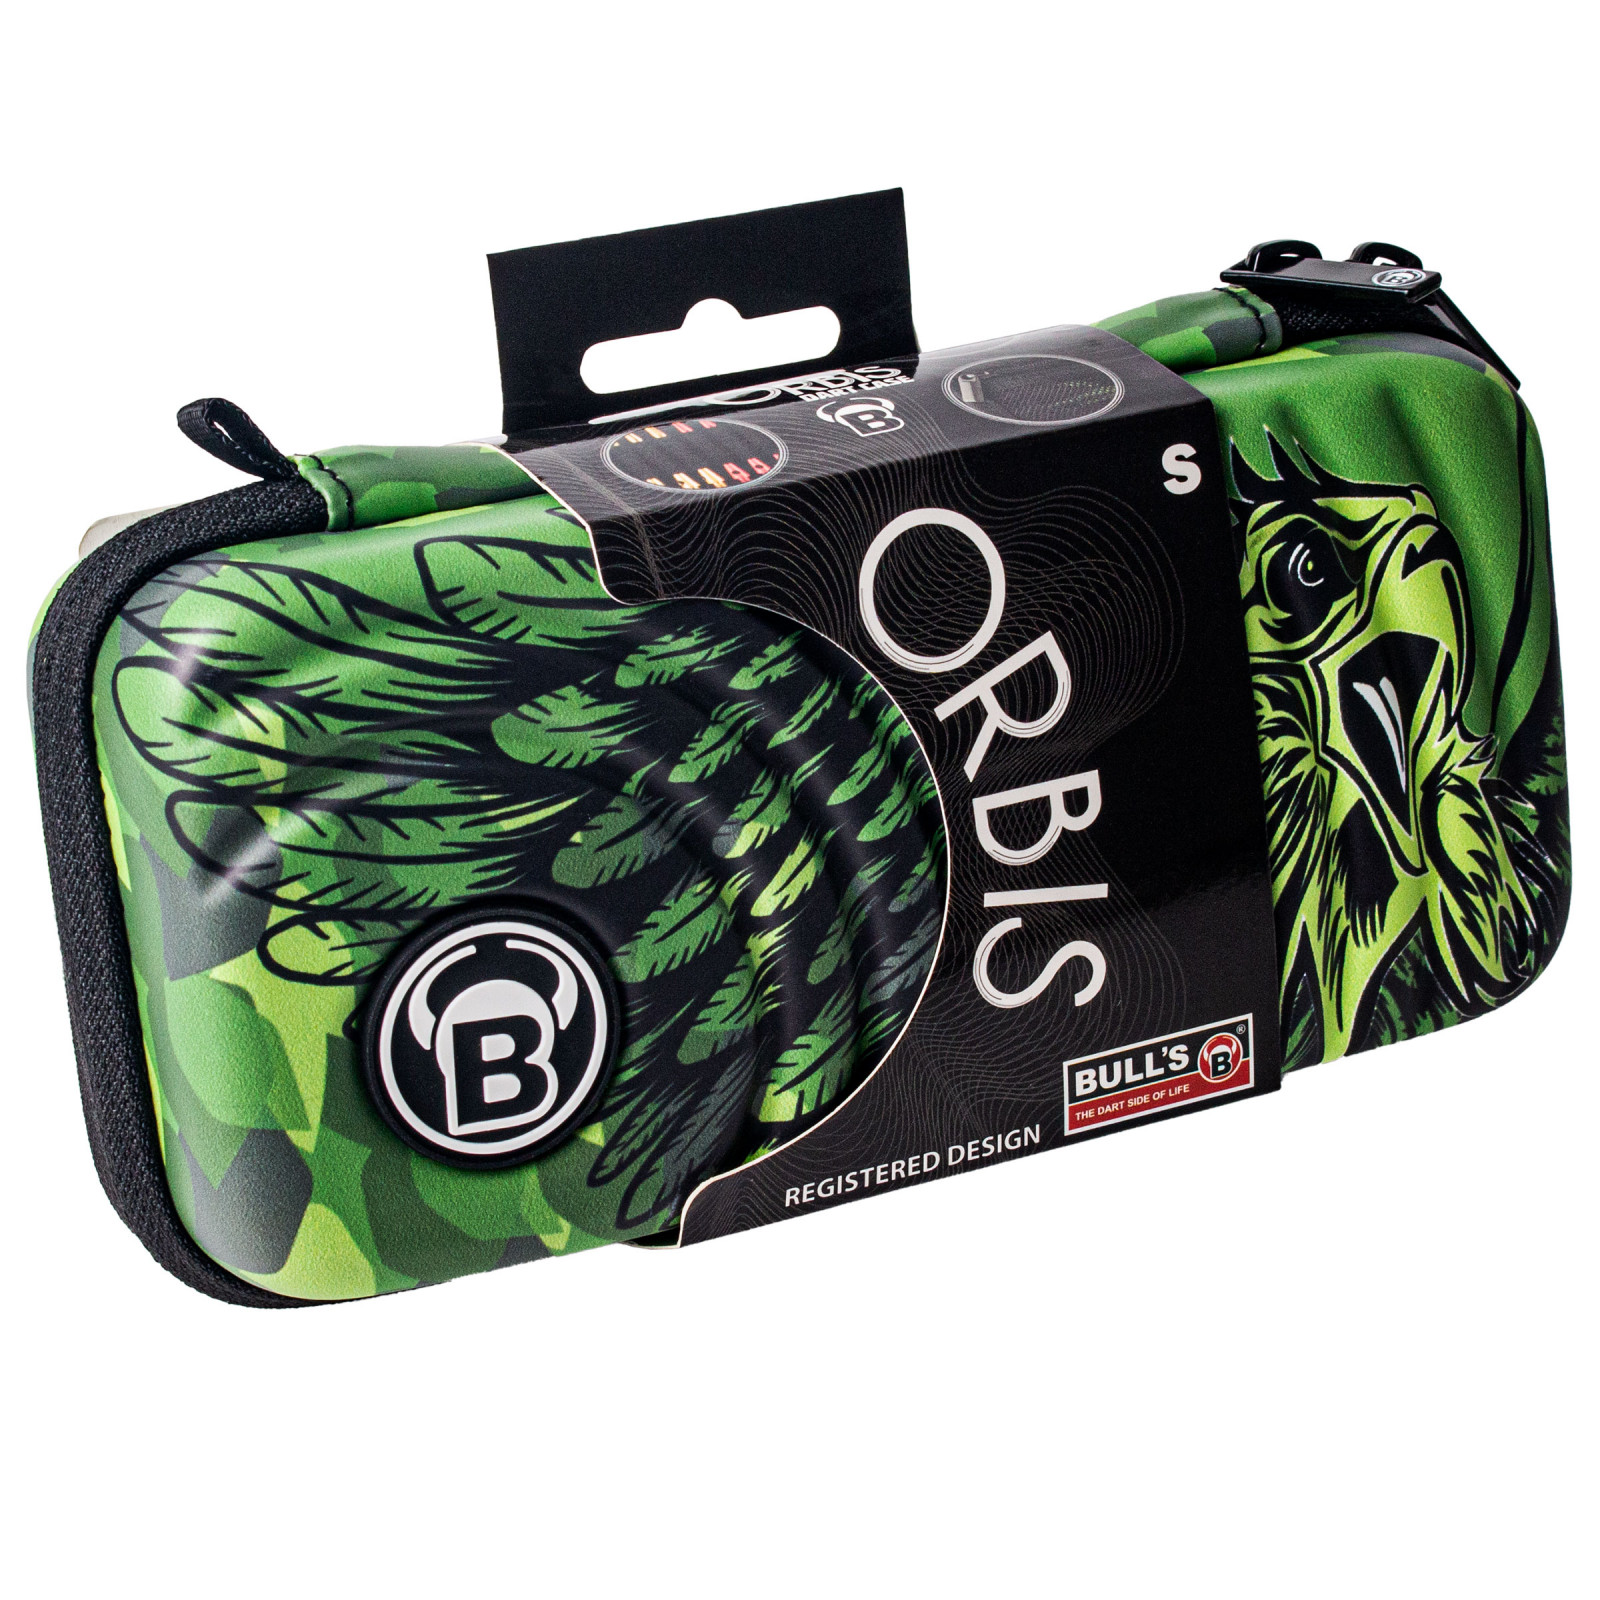 ORBIS S Bull's Dartcase - Limited Edition LE3